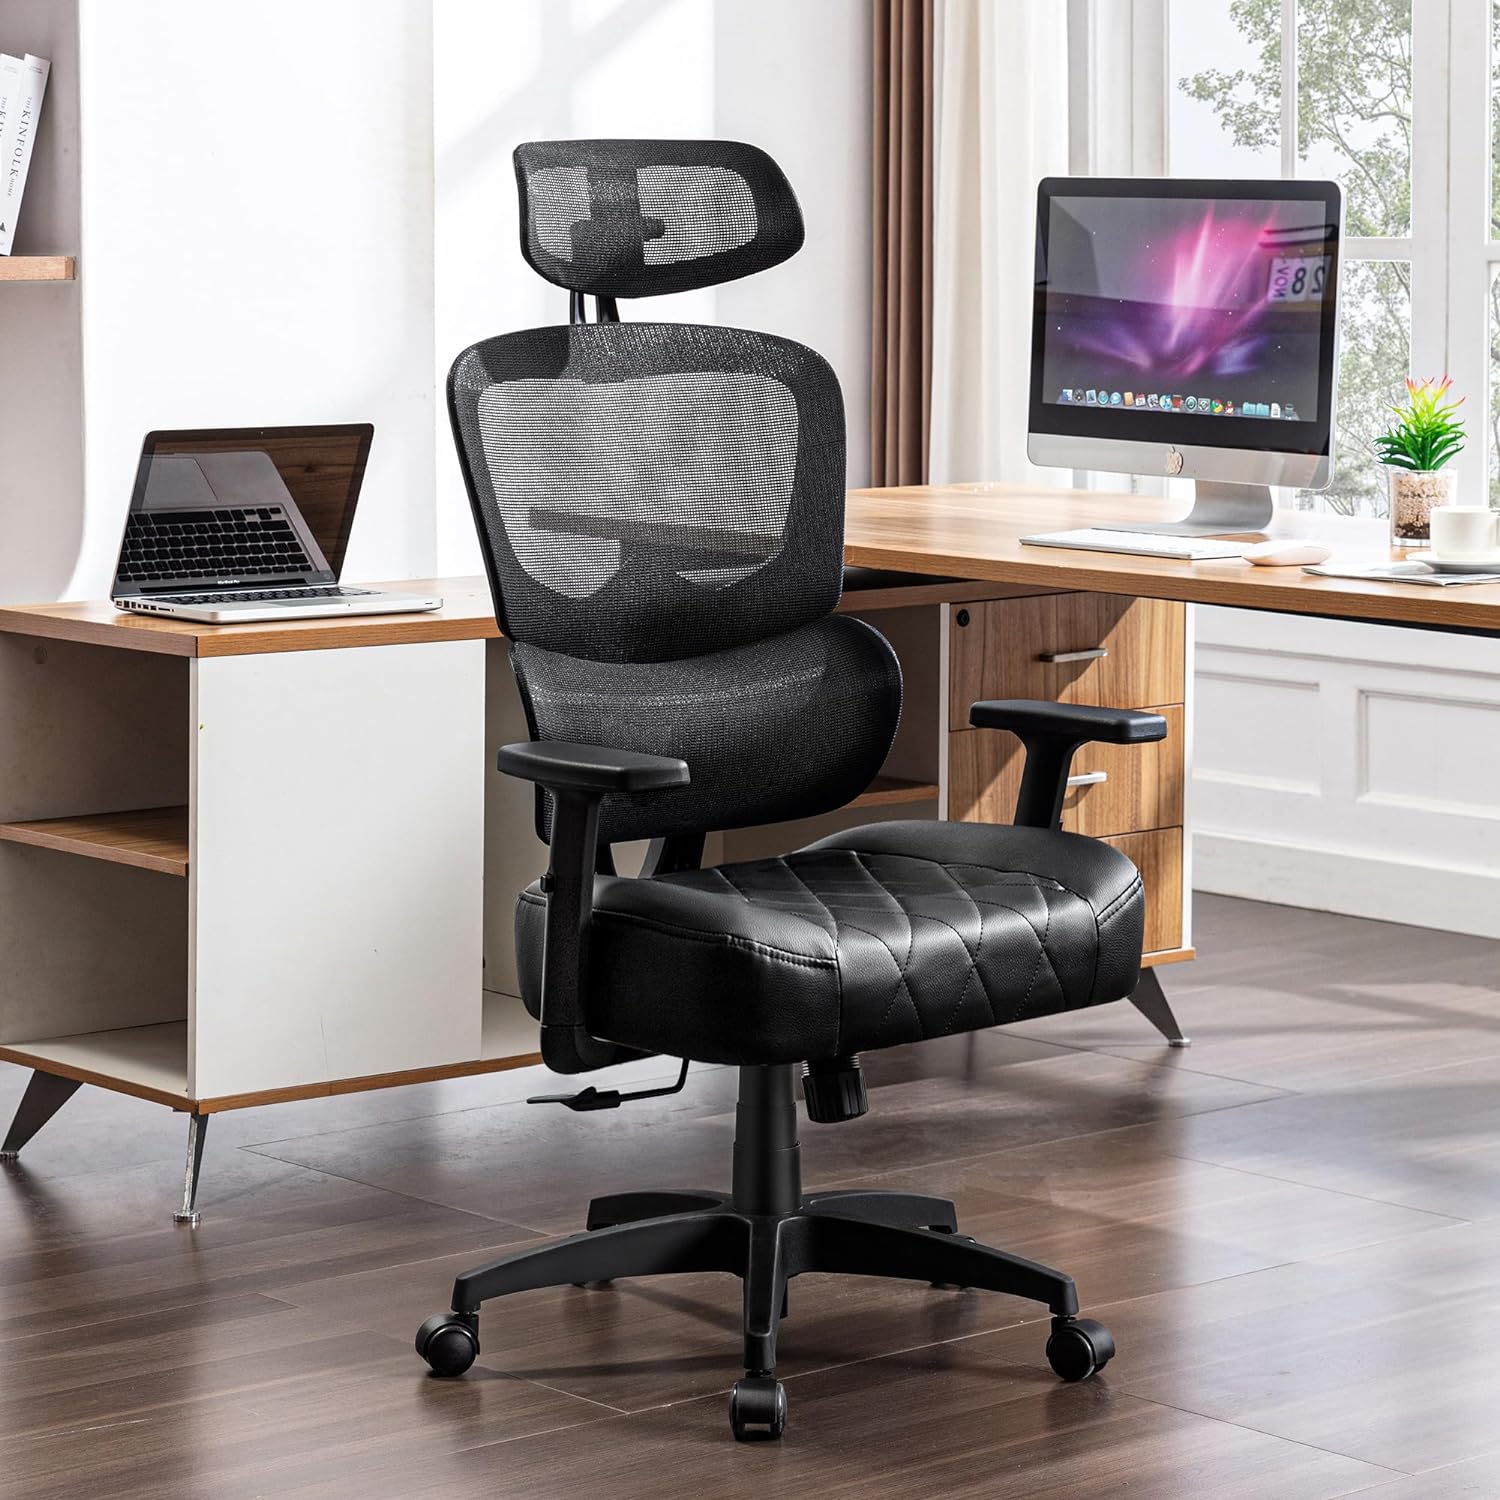 VECELO Tall Swivel Ergonomic High Back Mesh Office Chair with Adjustable Headrest&Armrest